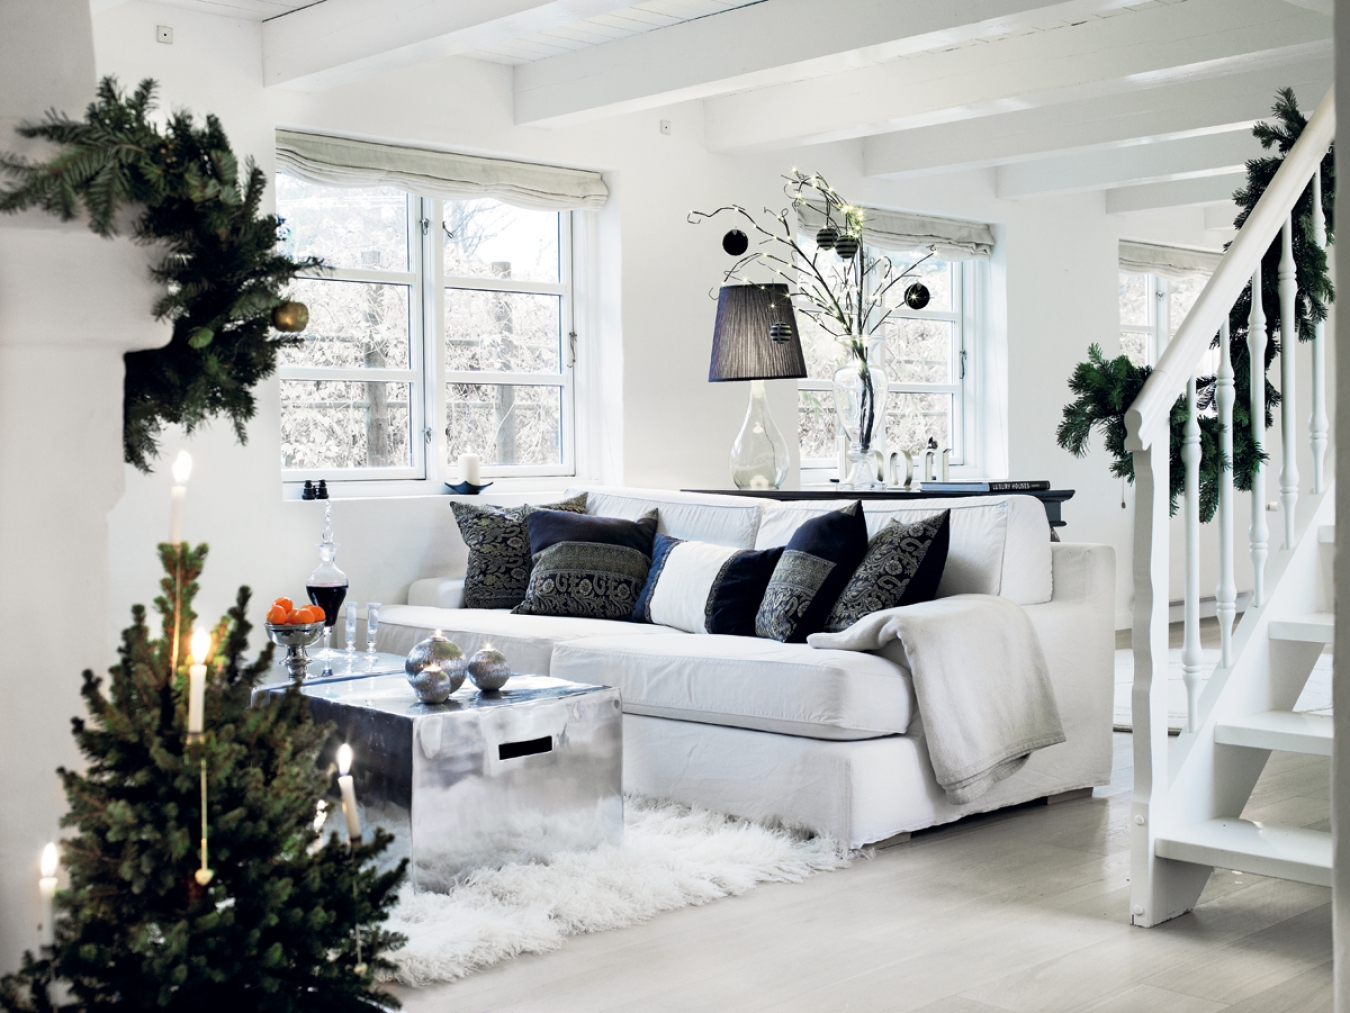 New Year's interior in the Scandinavian living room